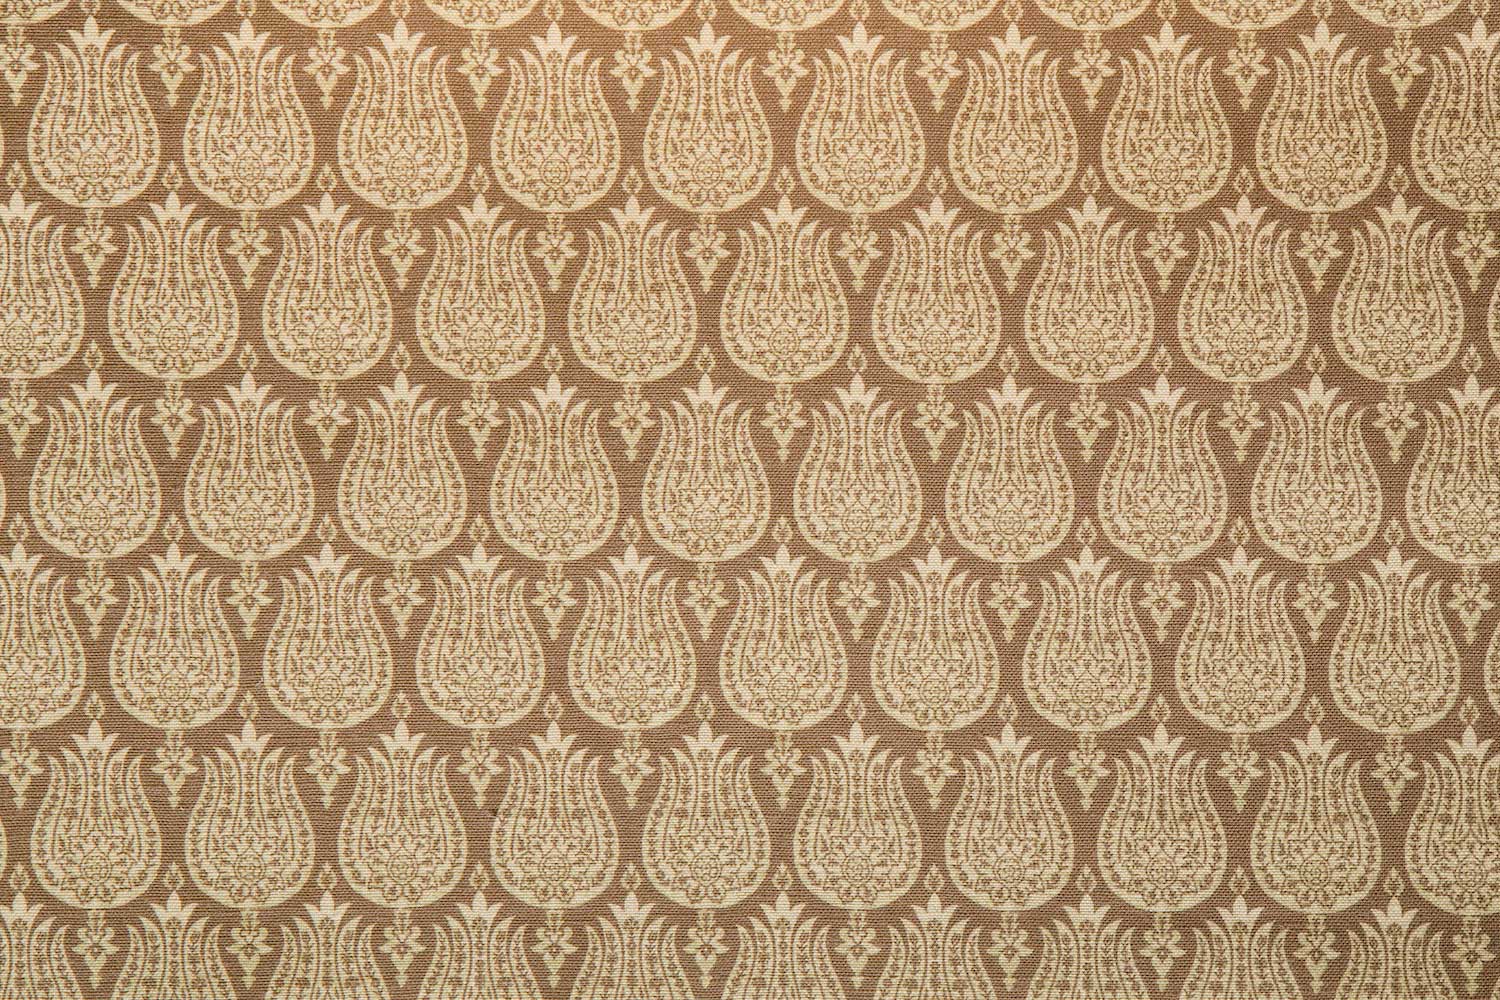 Abbot Atlas ottoman tulip sand fabric linen printed